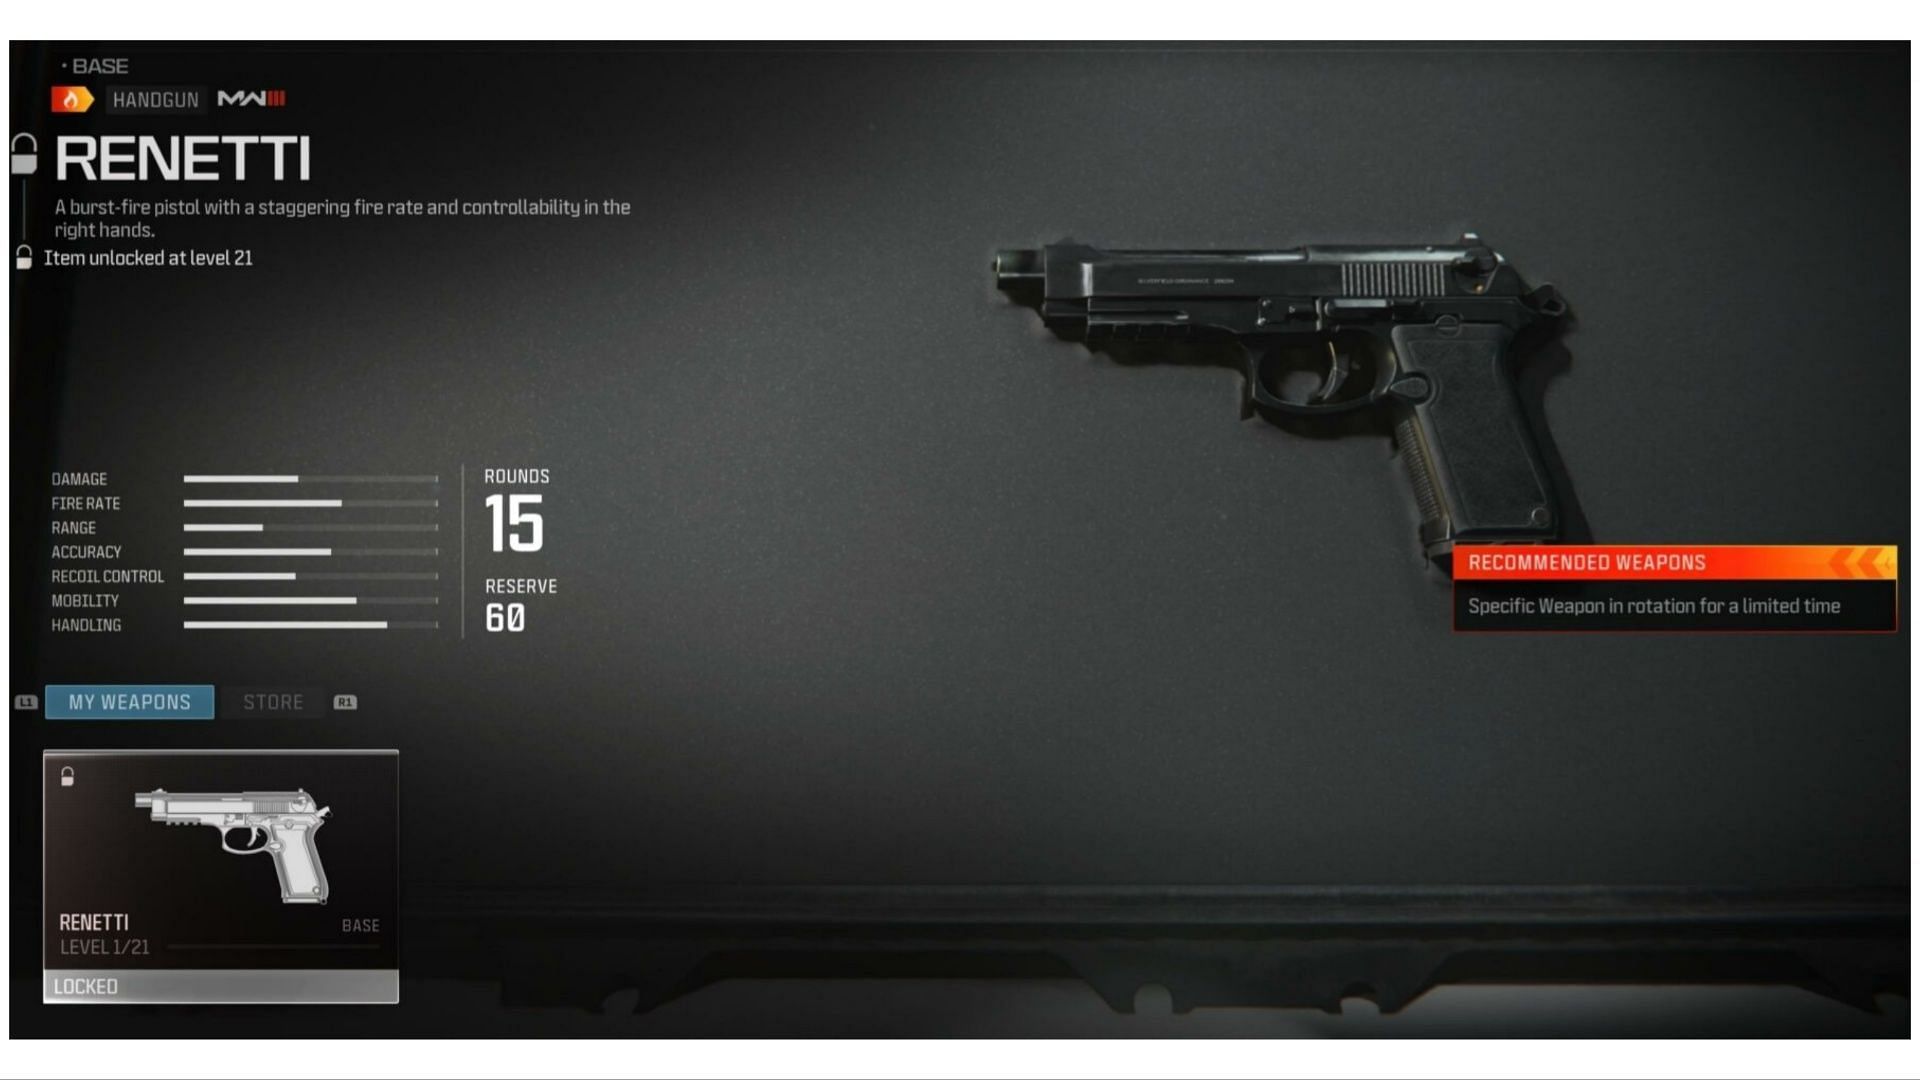 Renetti handgun in MW3 (Image via Activision)